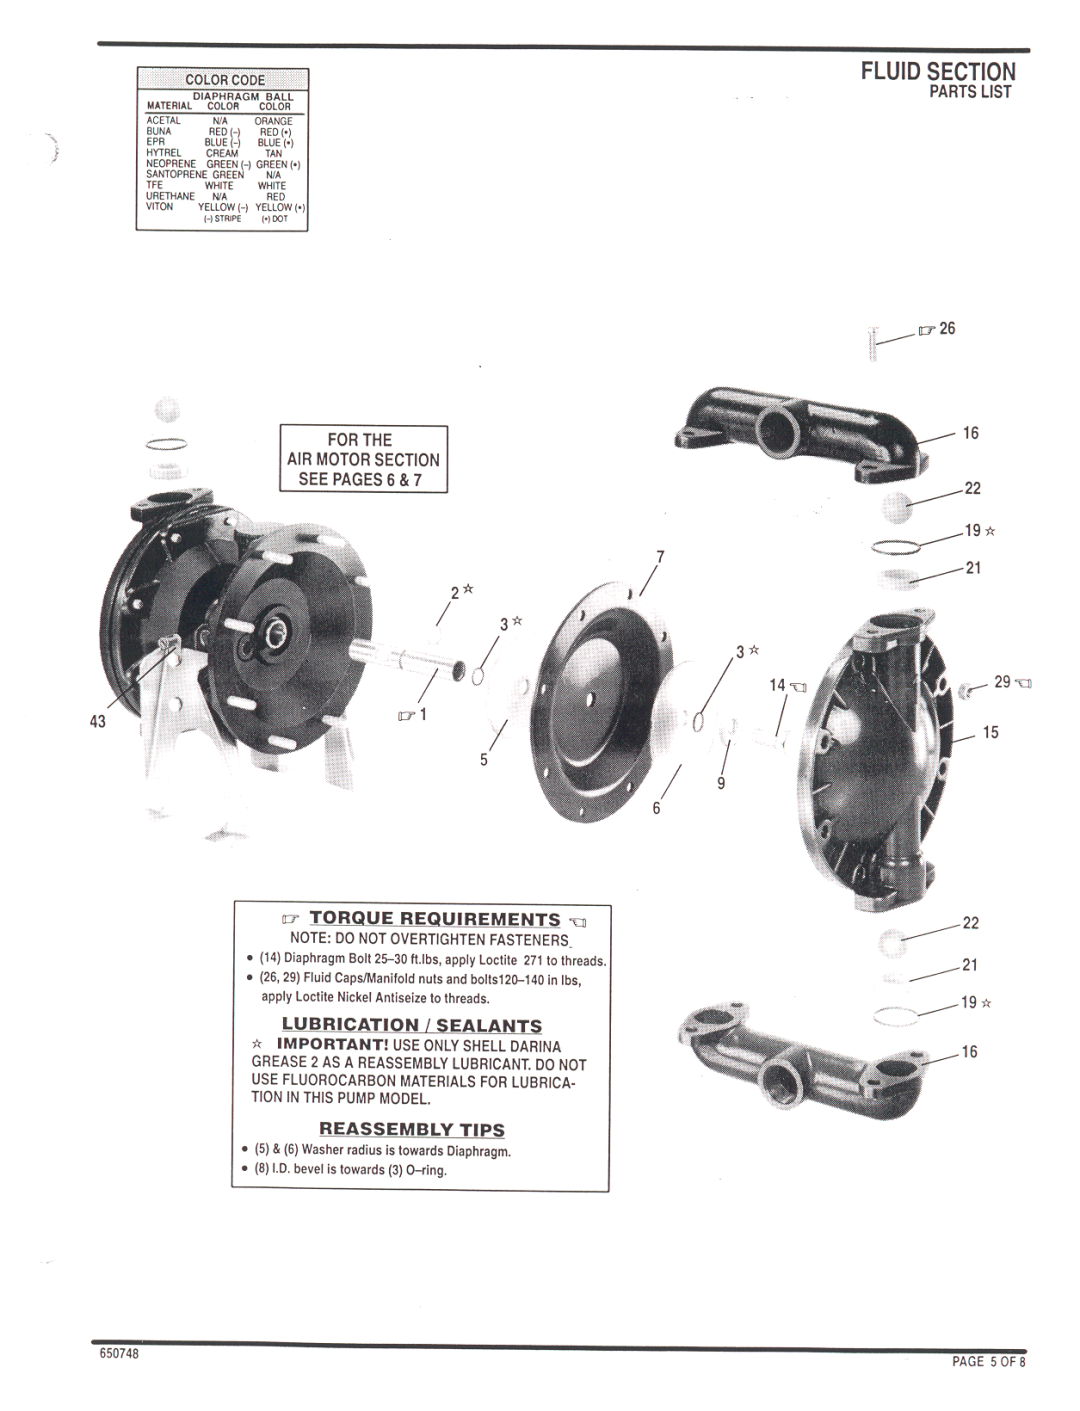 Ingersoll-Rand 650748 manual 